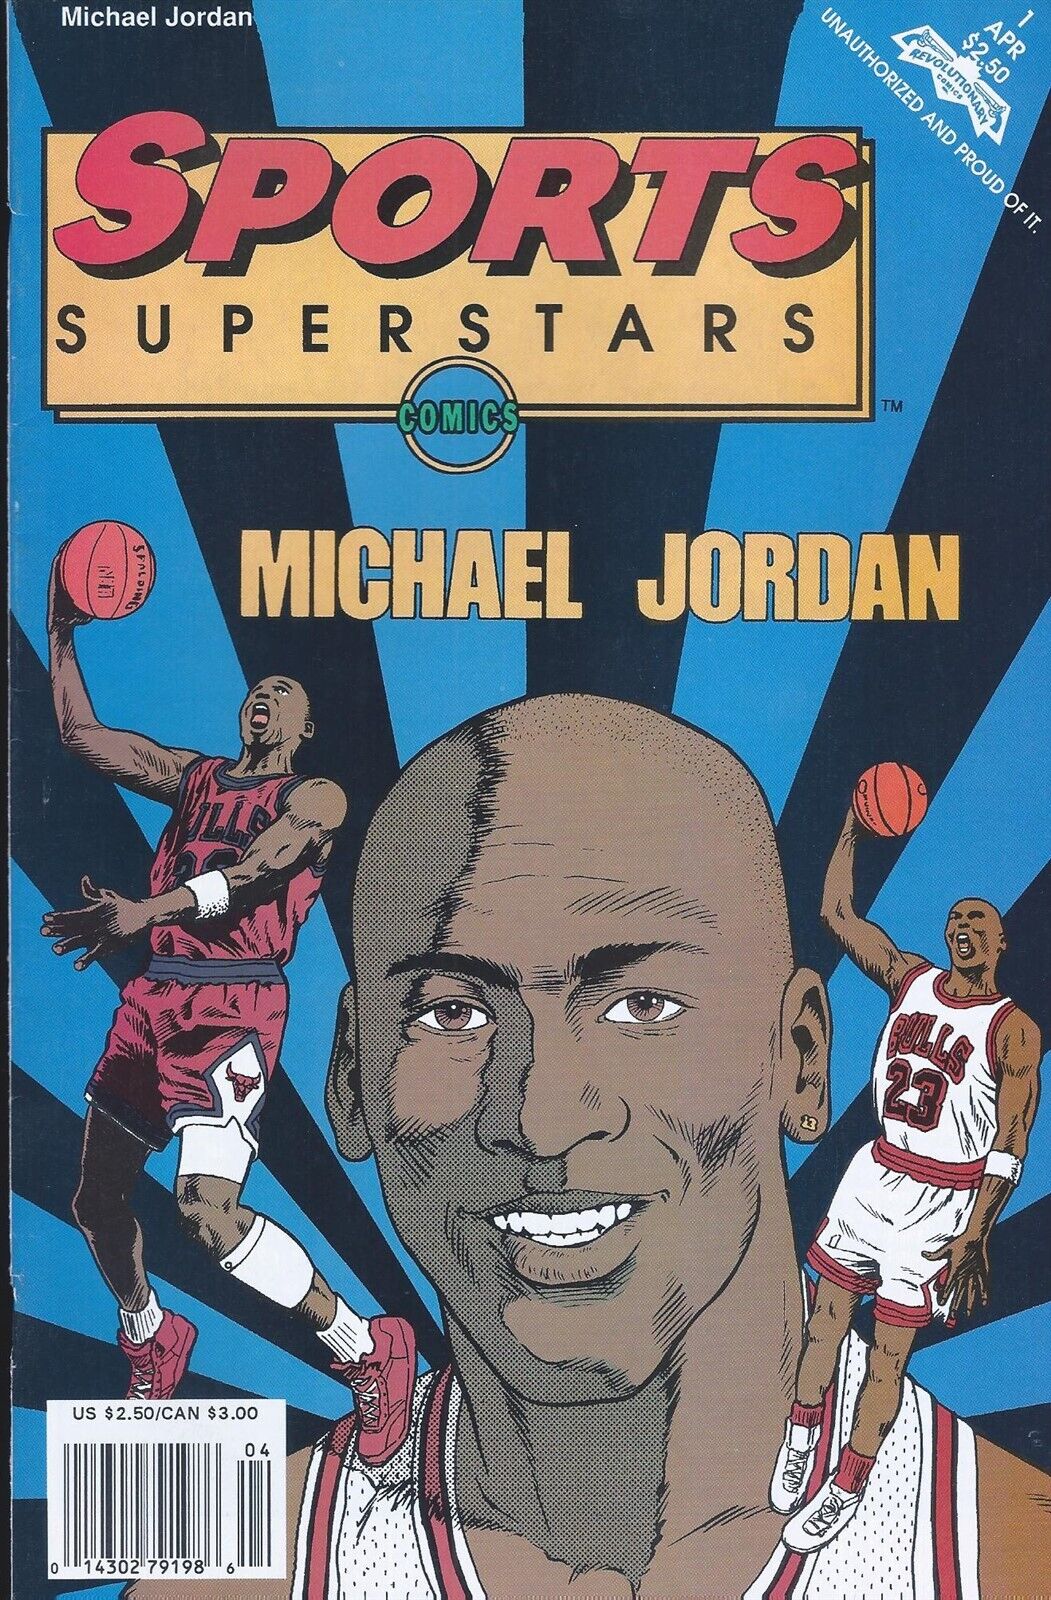 1992 Revolutionary Comics #1 MICHAEL JORDAN Sports Superstars - Chicago Bulls